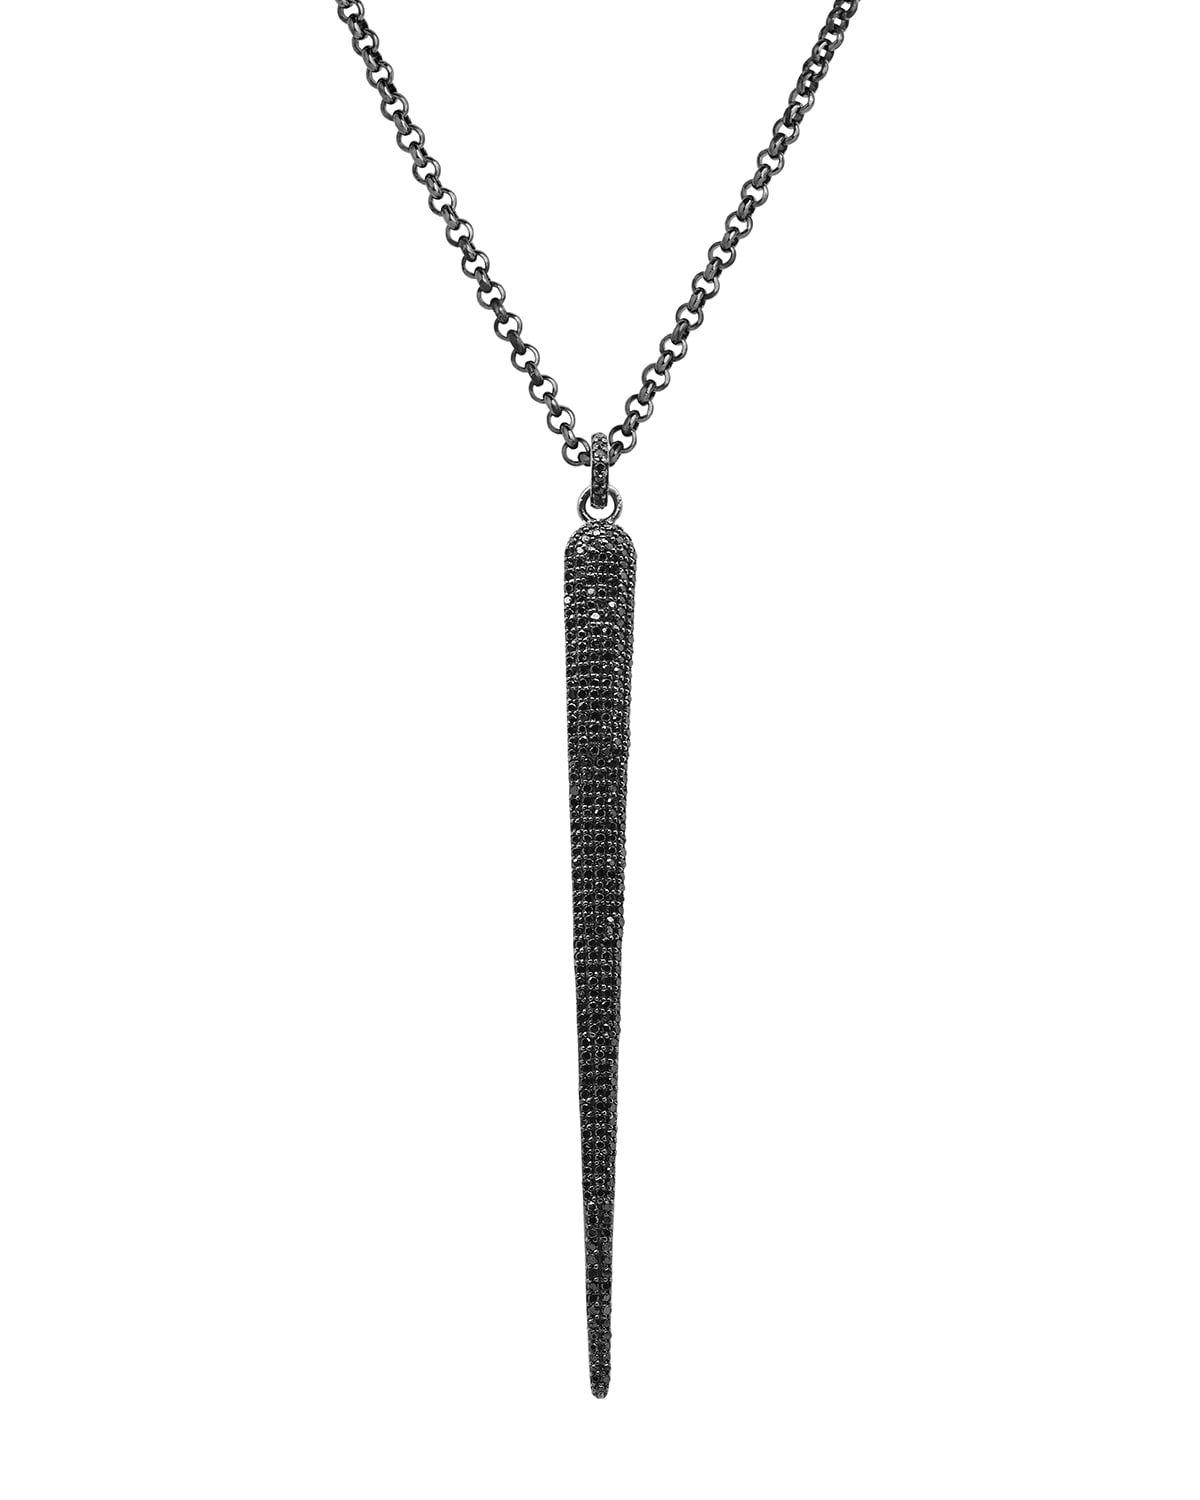 Bridget King Jewelry Black Diamond Spear Necklace